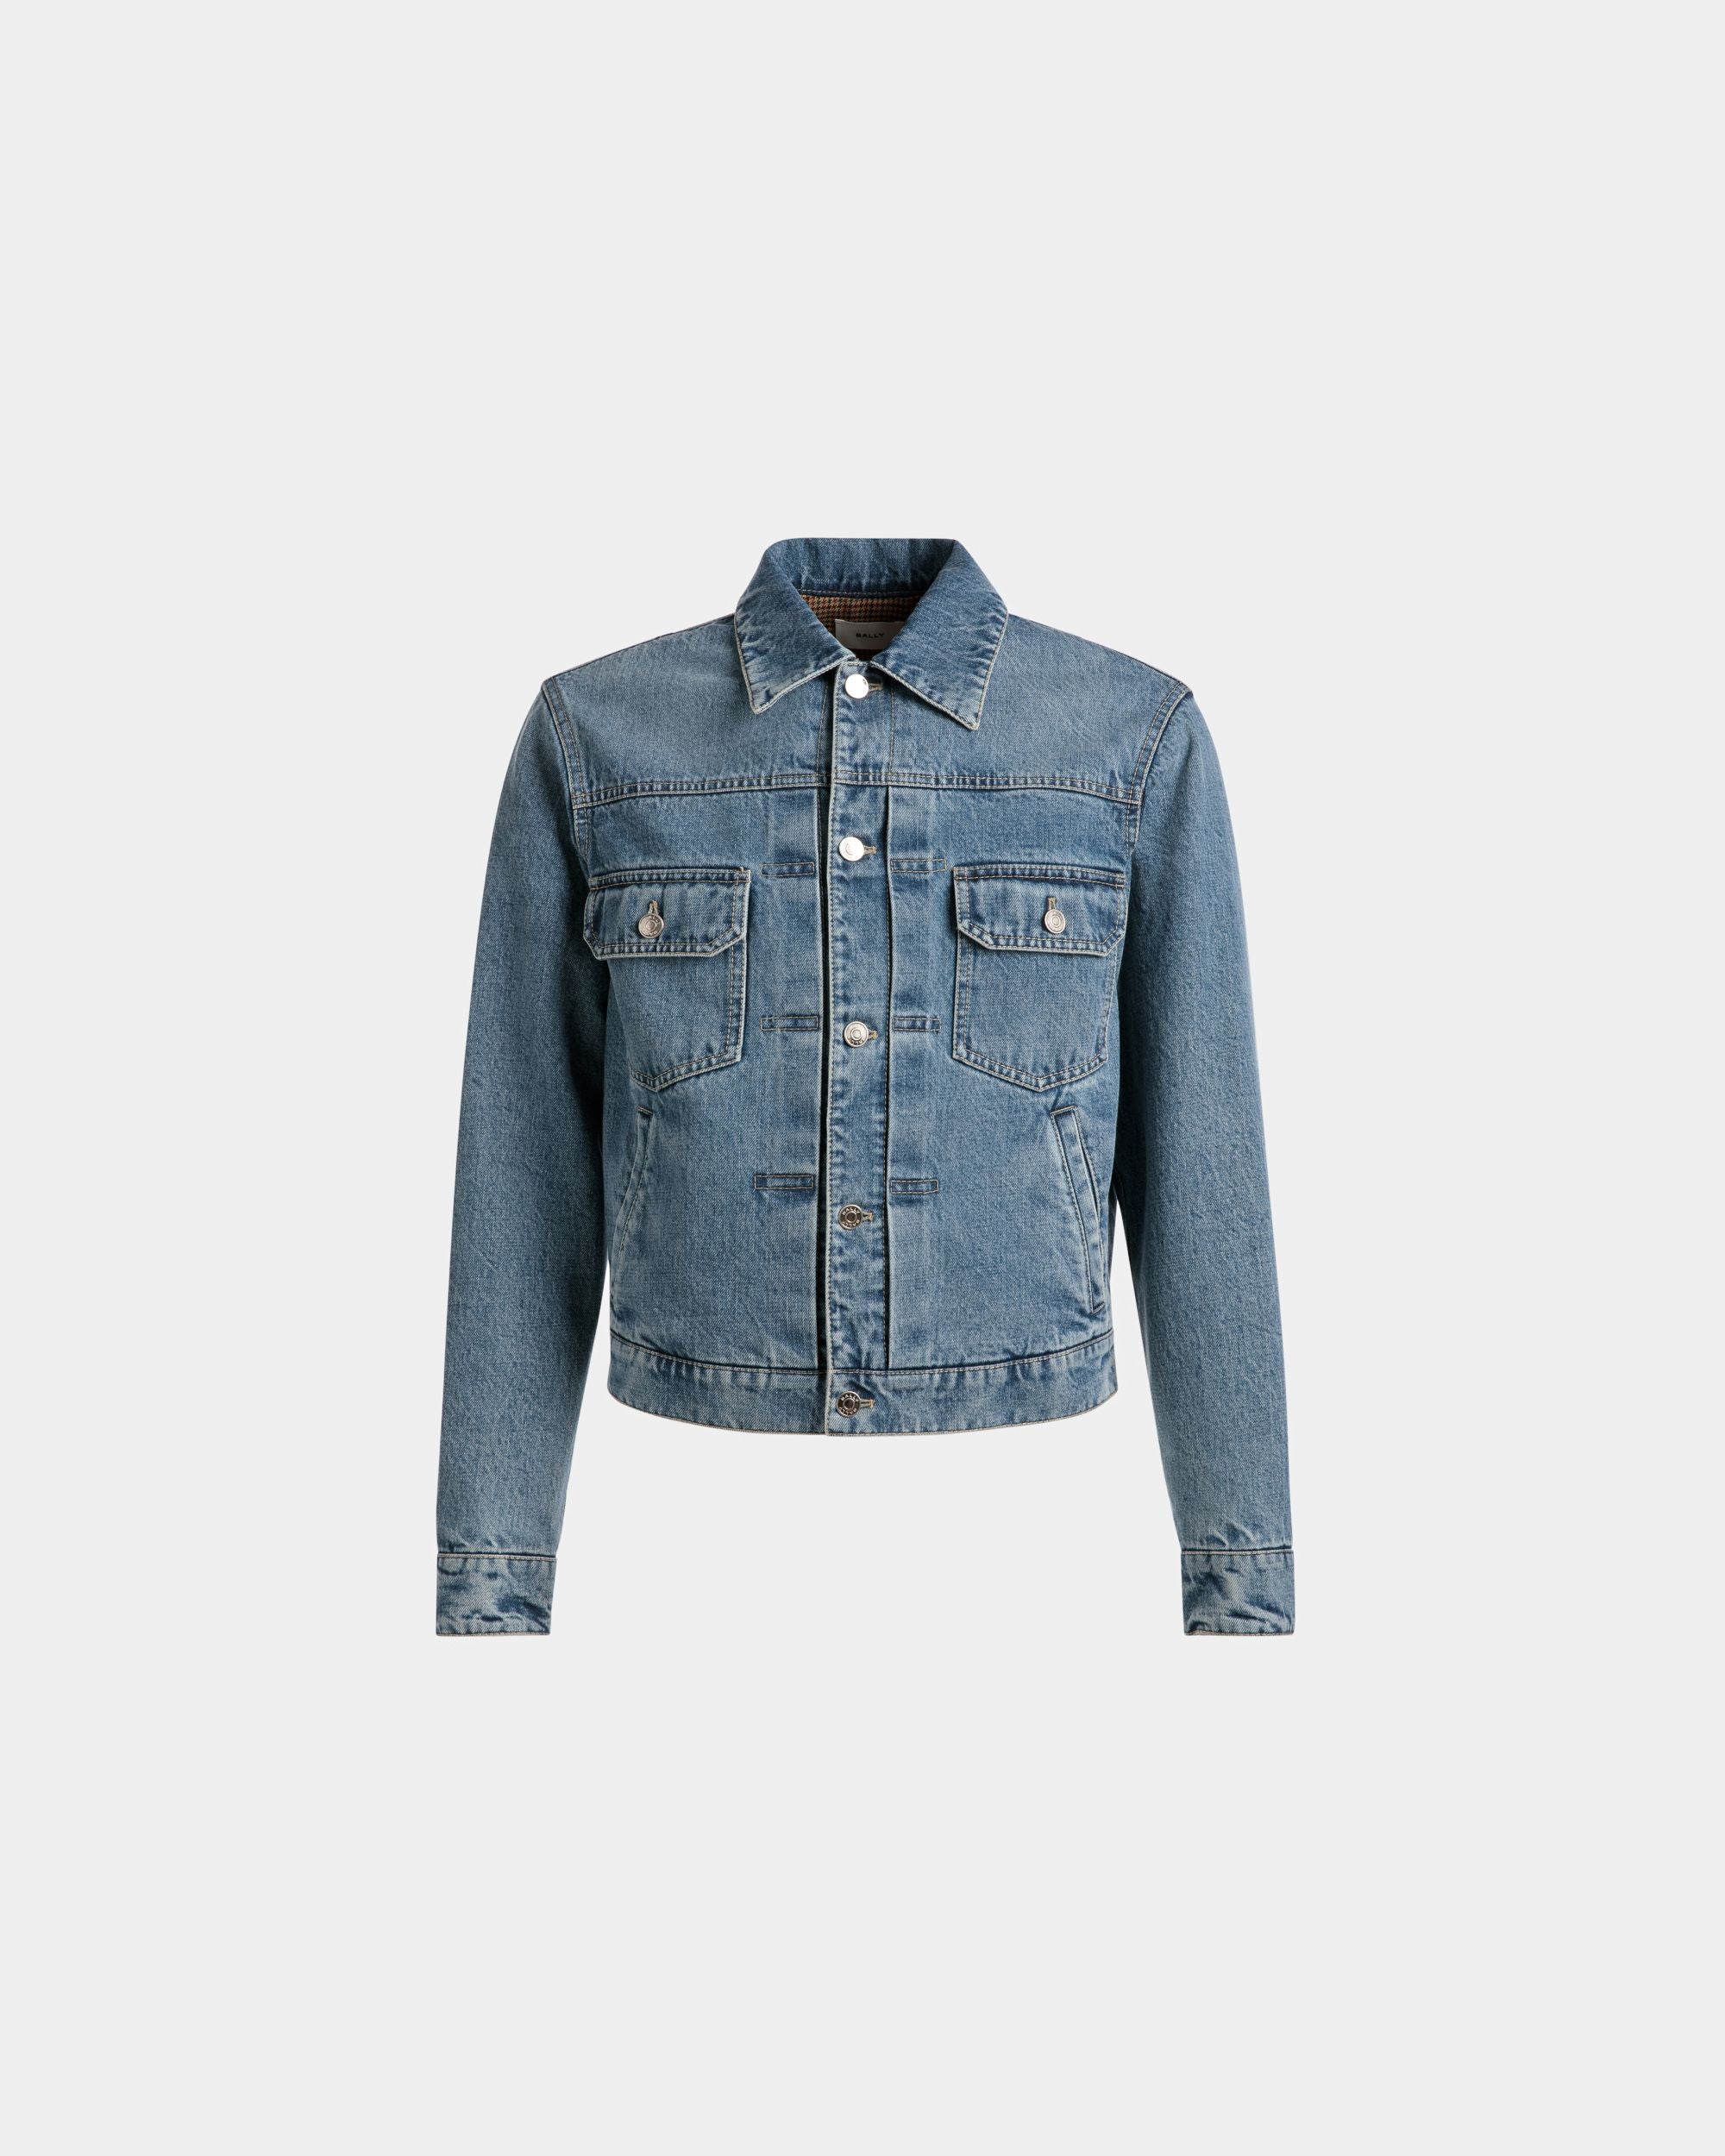 Buttoned Jacket | Men's Jacket | Light Blue Denim | Bally | Still Life Front